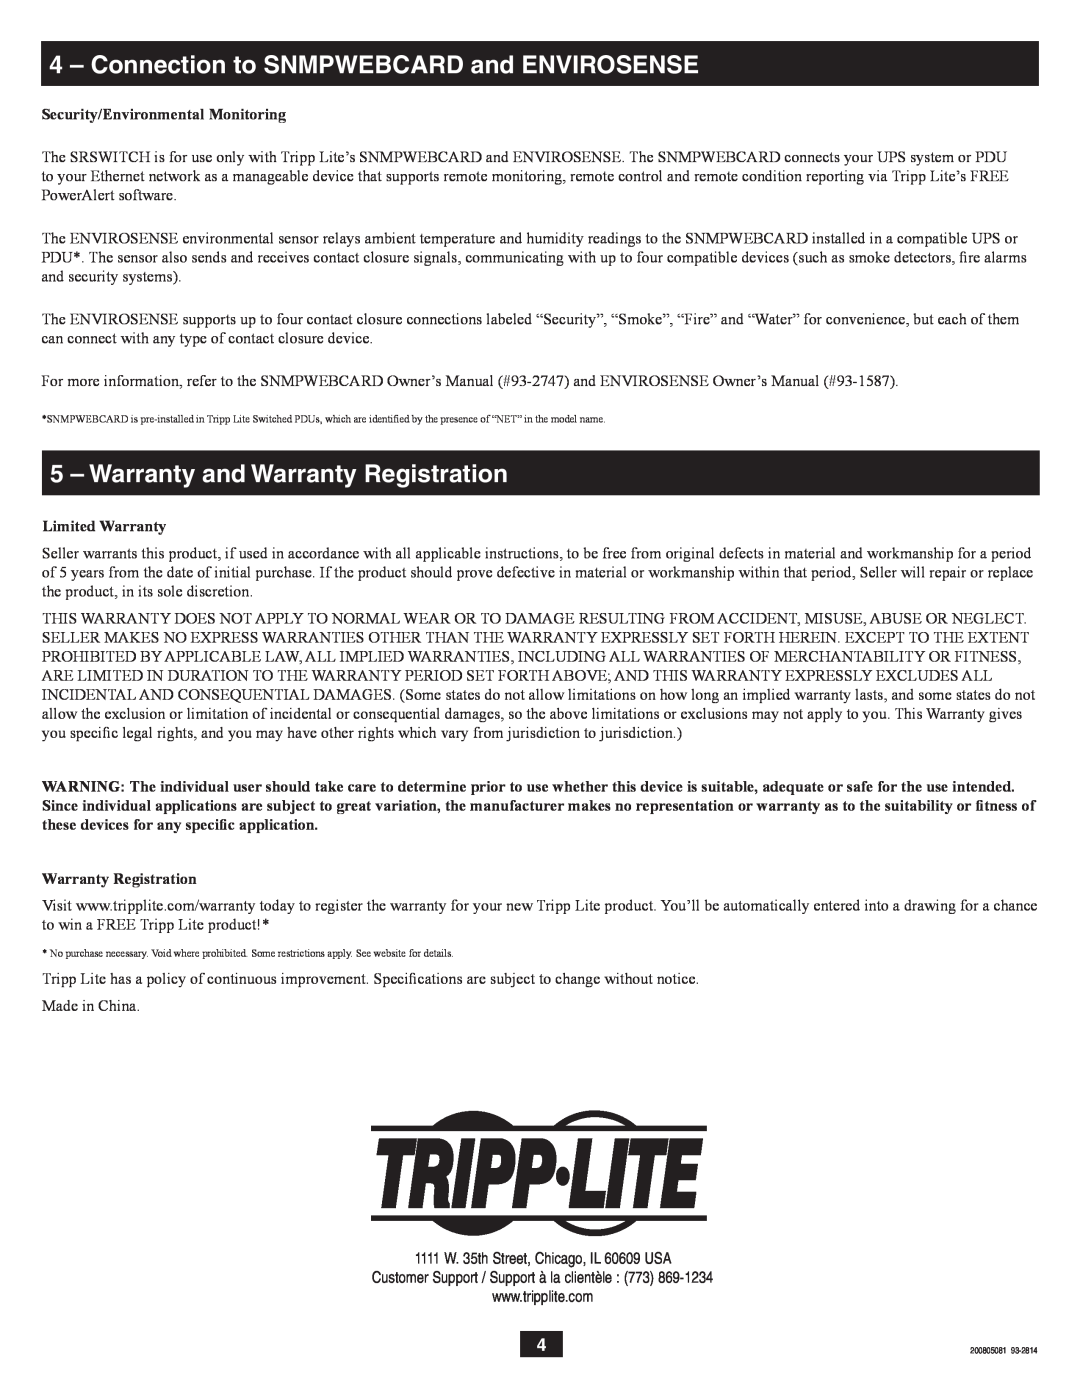 Tripp Lite SRSWITCH Connection to SNMPWEBCARD and ENVIROSENSE, Warranty and Warranty Registration, Limited Warranty 